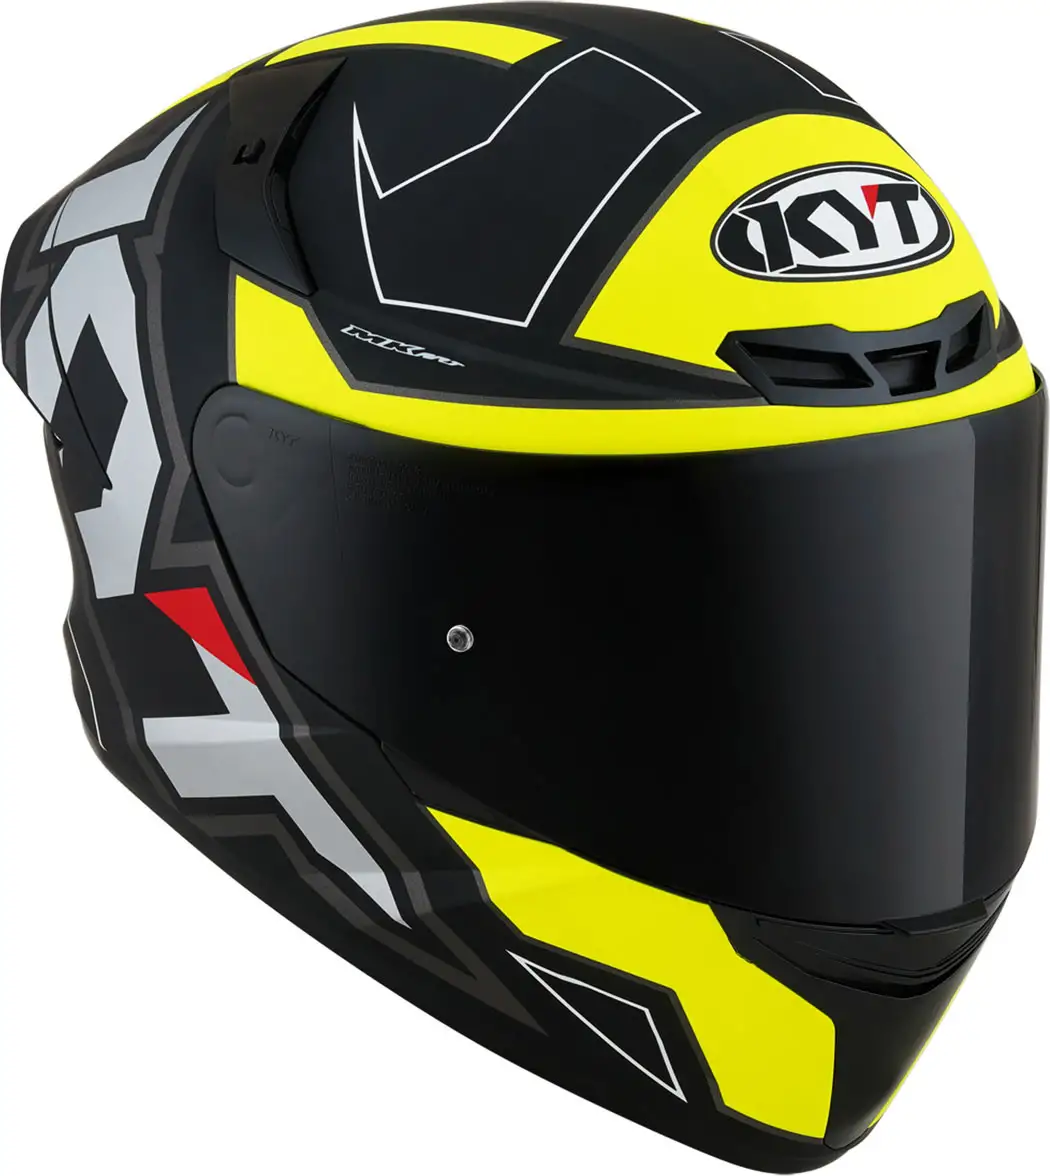  Kyt  TT COURSE ELECTRON full  face  helmet  Matt Black Yellow